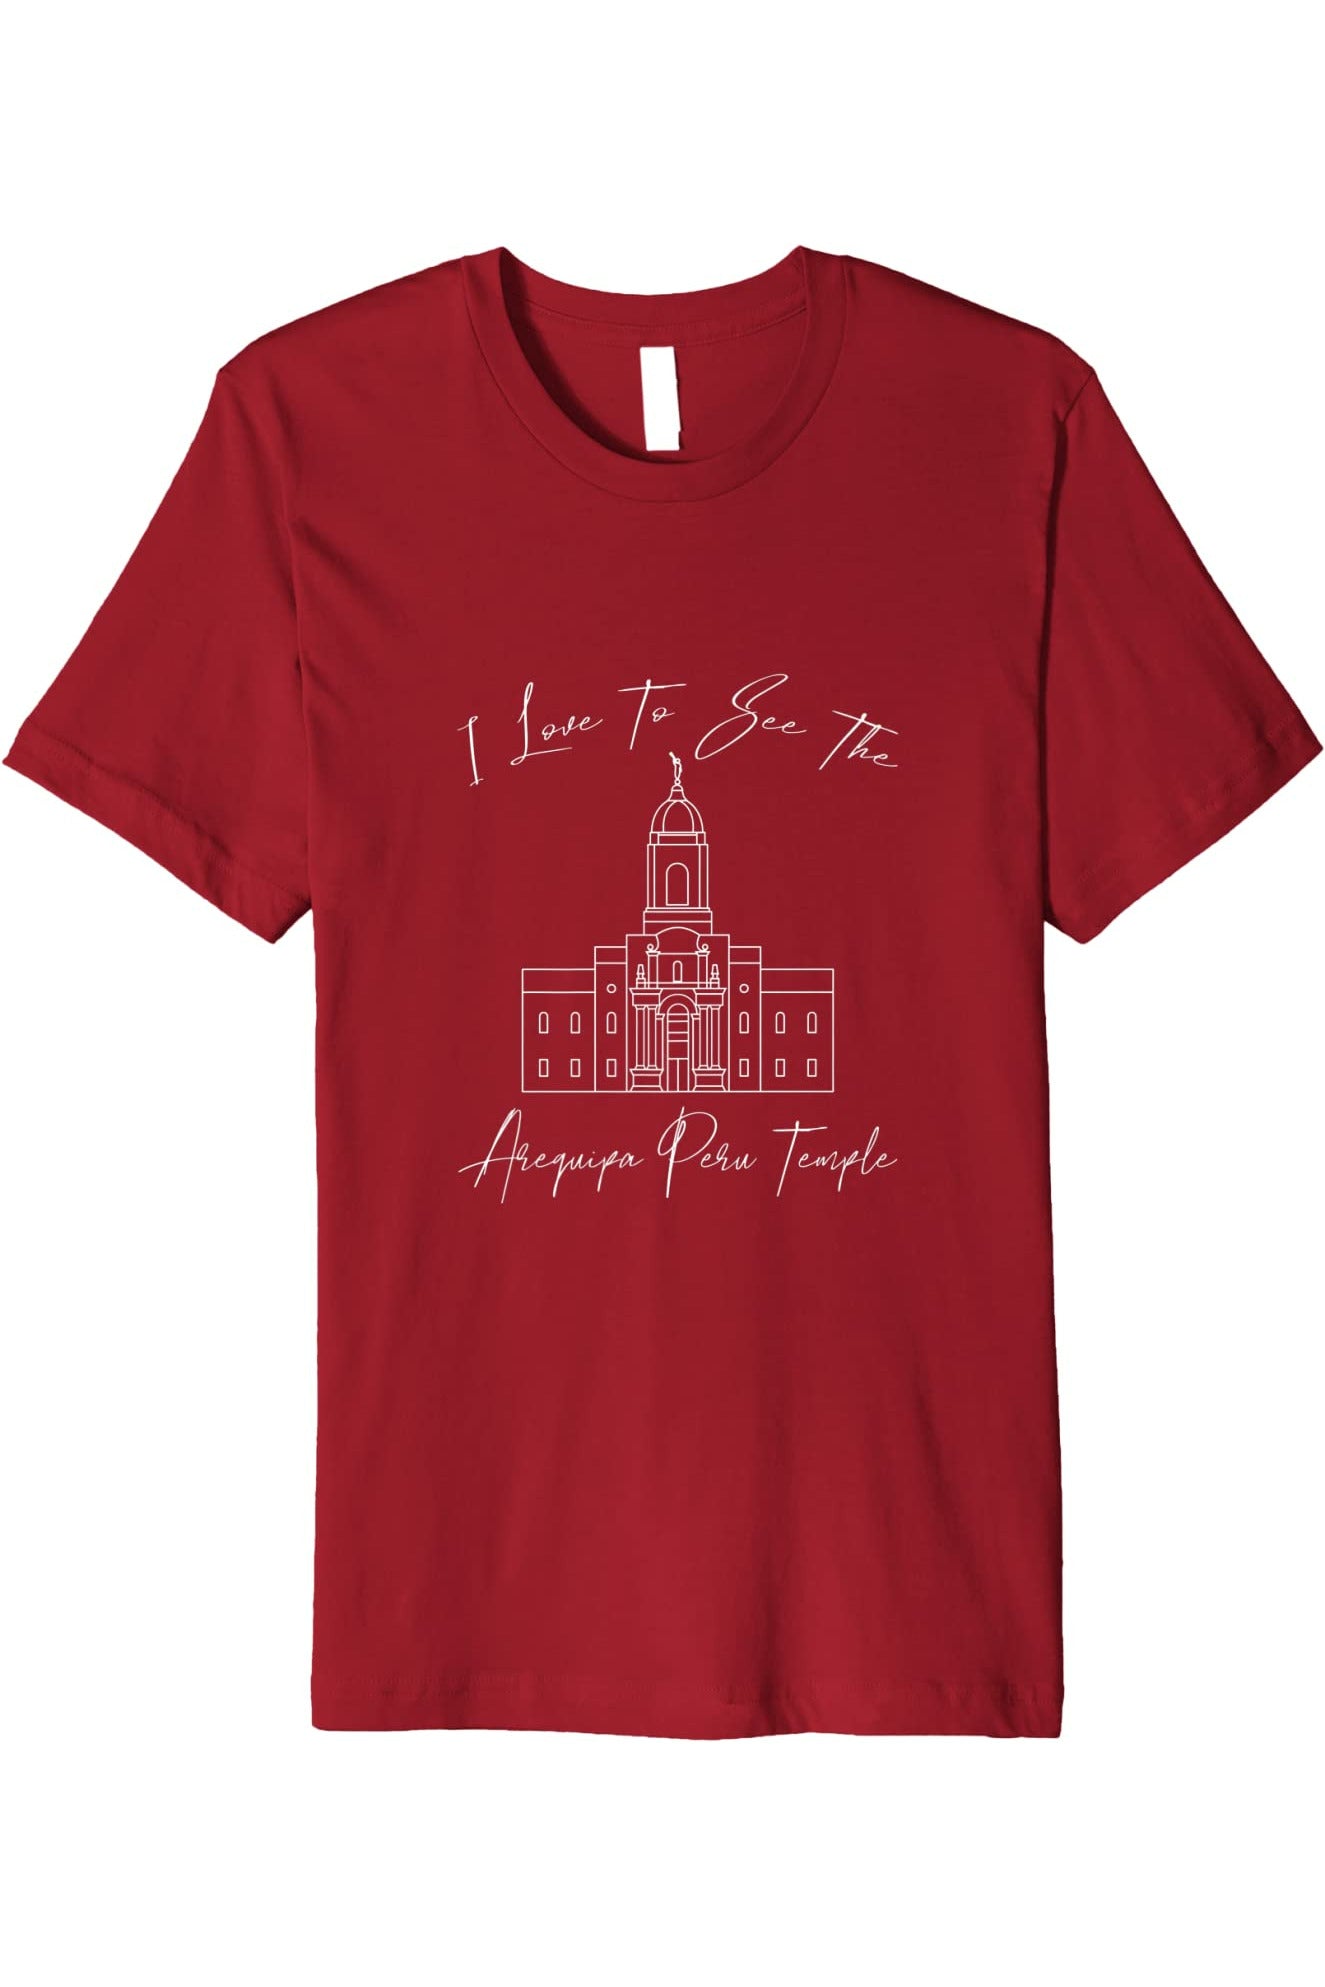 Arequipa Peru Temple T-Shirt - Premium - Calligraphy Style (English) US